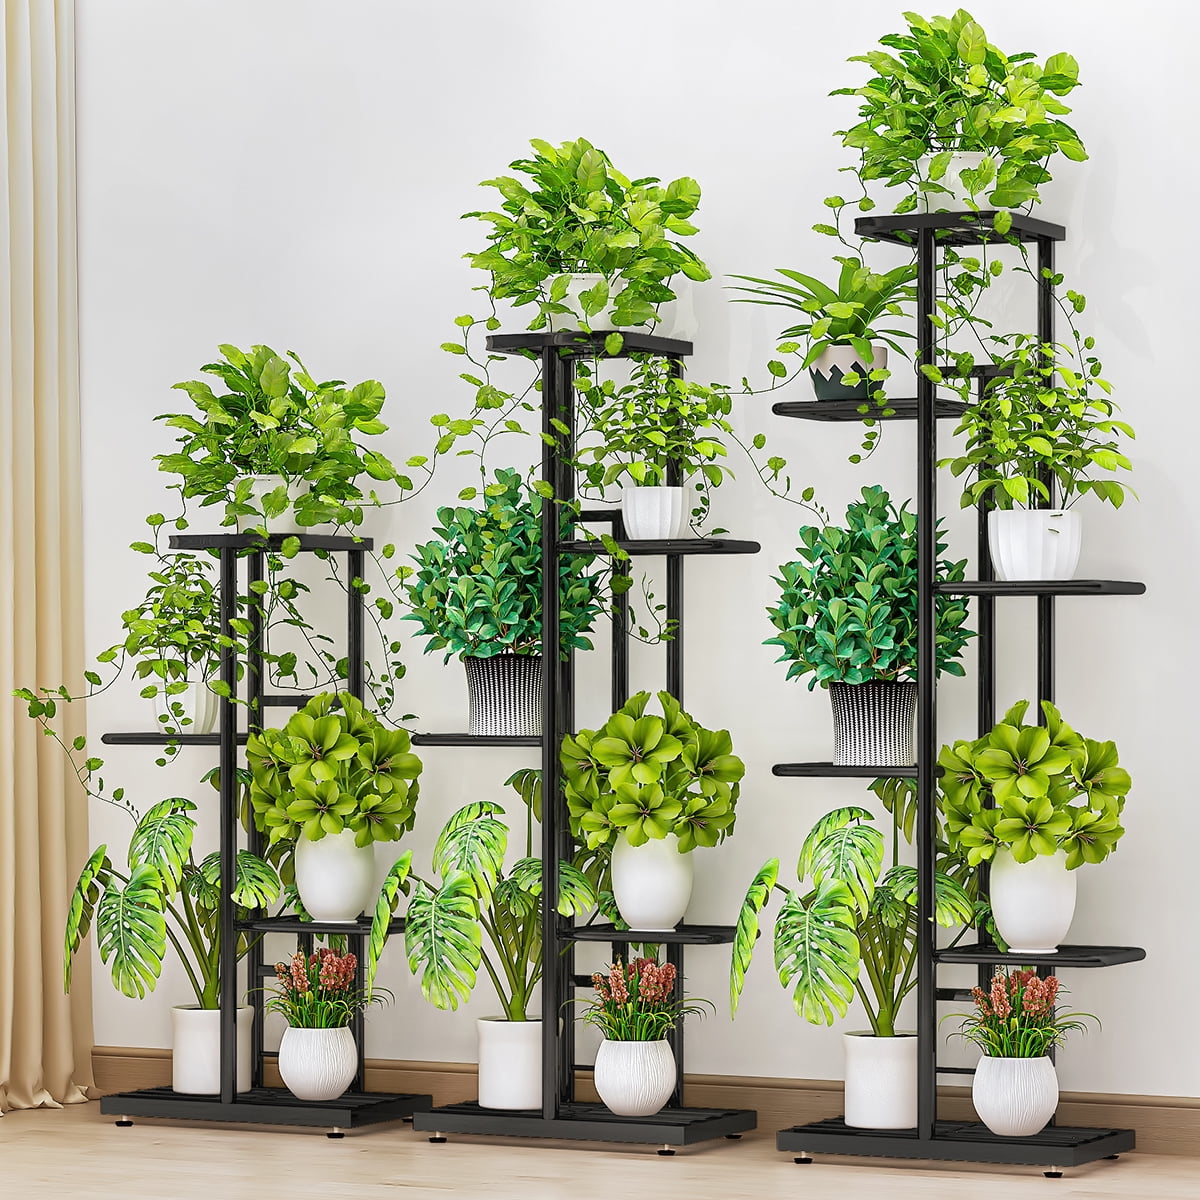 4 Tier Metal Plant Stand Garden Home Decor Planter Holder Flower Pot Shelf Rack 